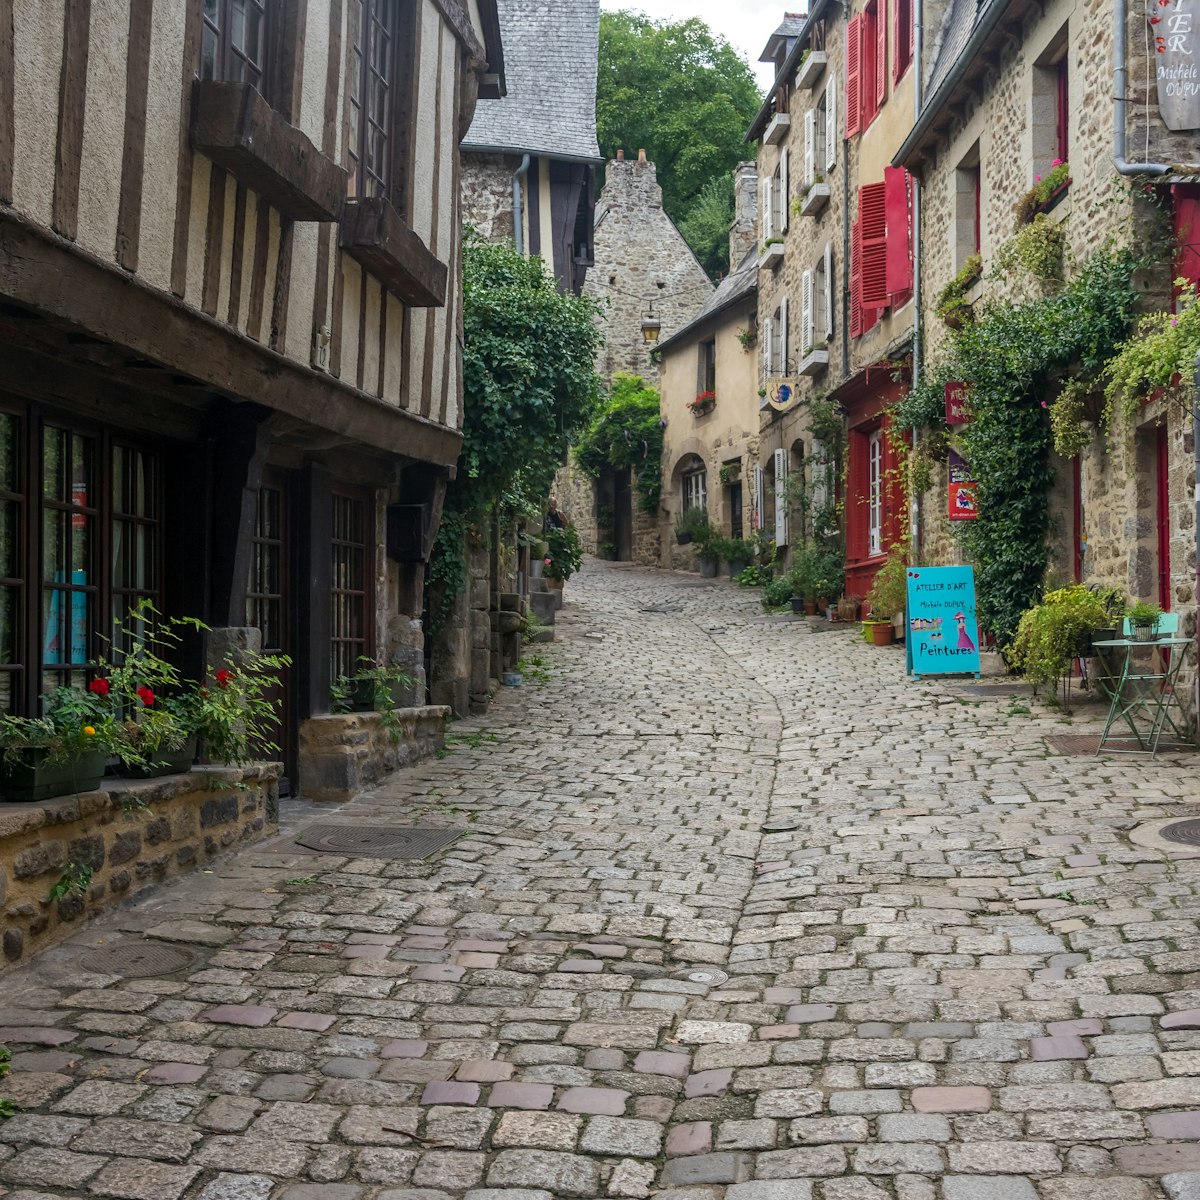 Rue du Petit Fort street in Dinan, France.